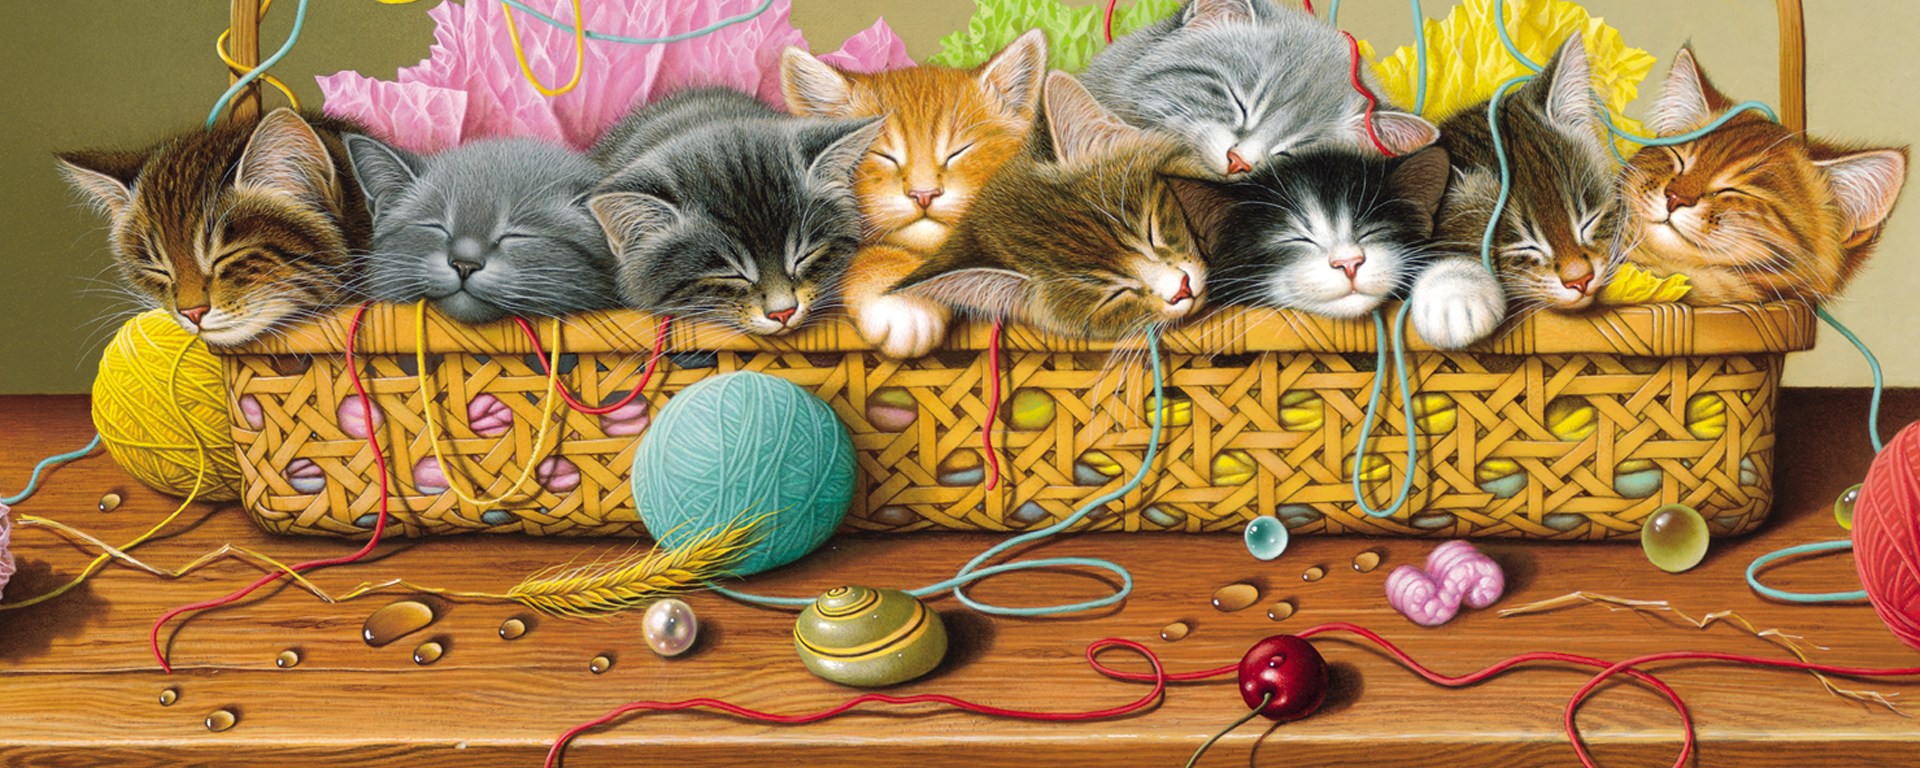 a litter of nine baby kittens sleeping in a basket of yarn on a tabletop